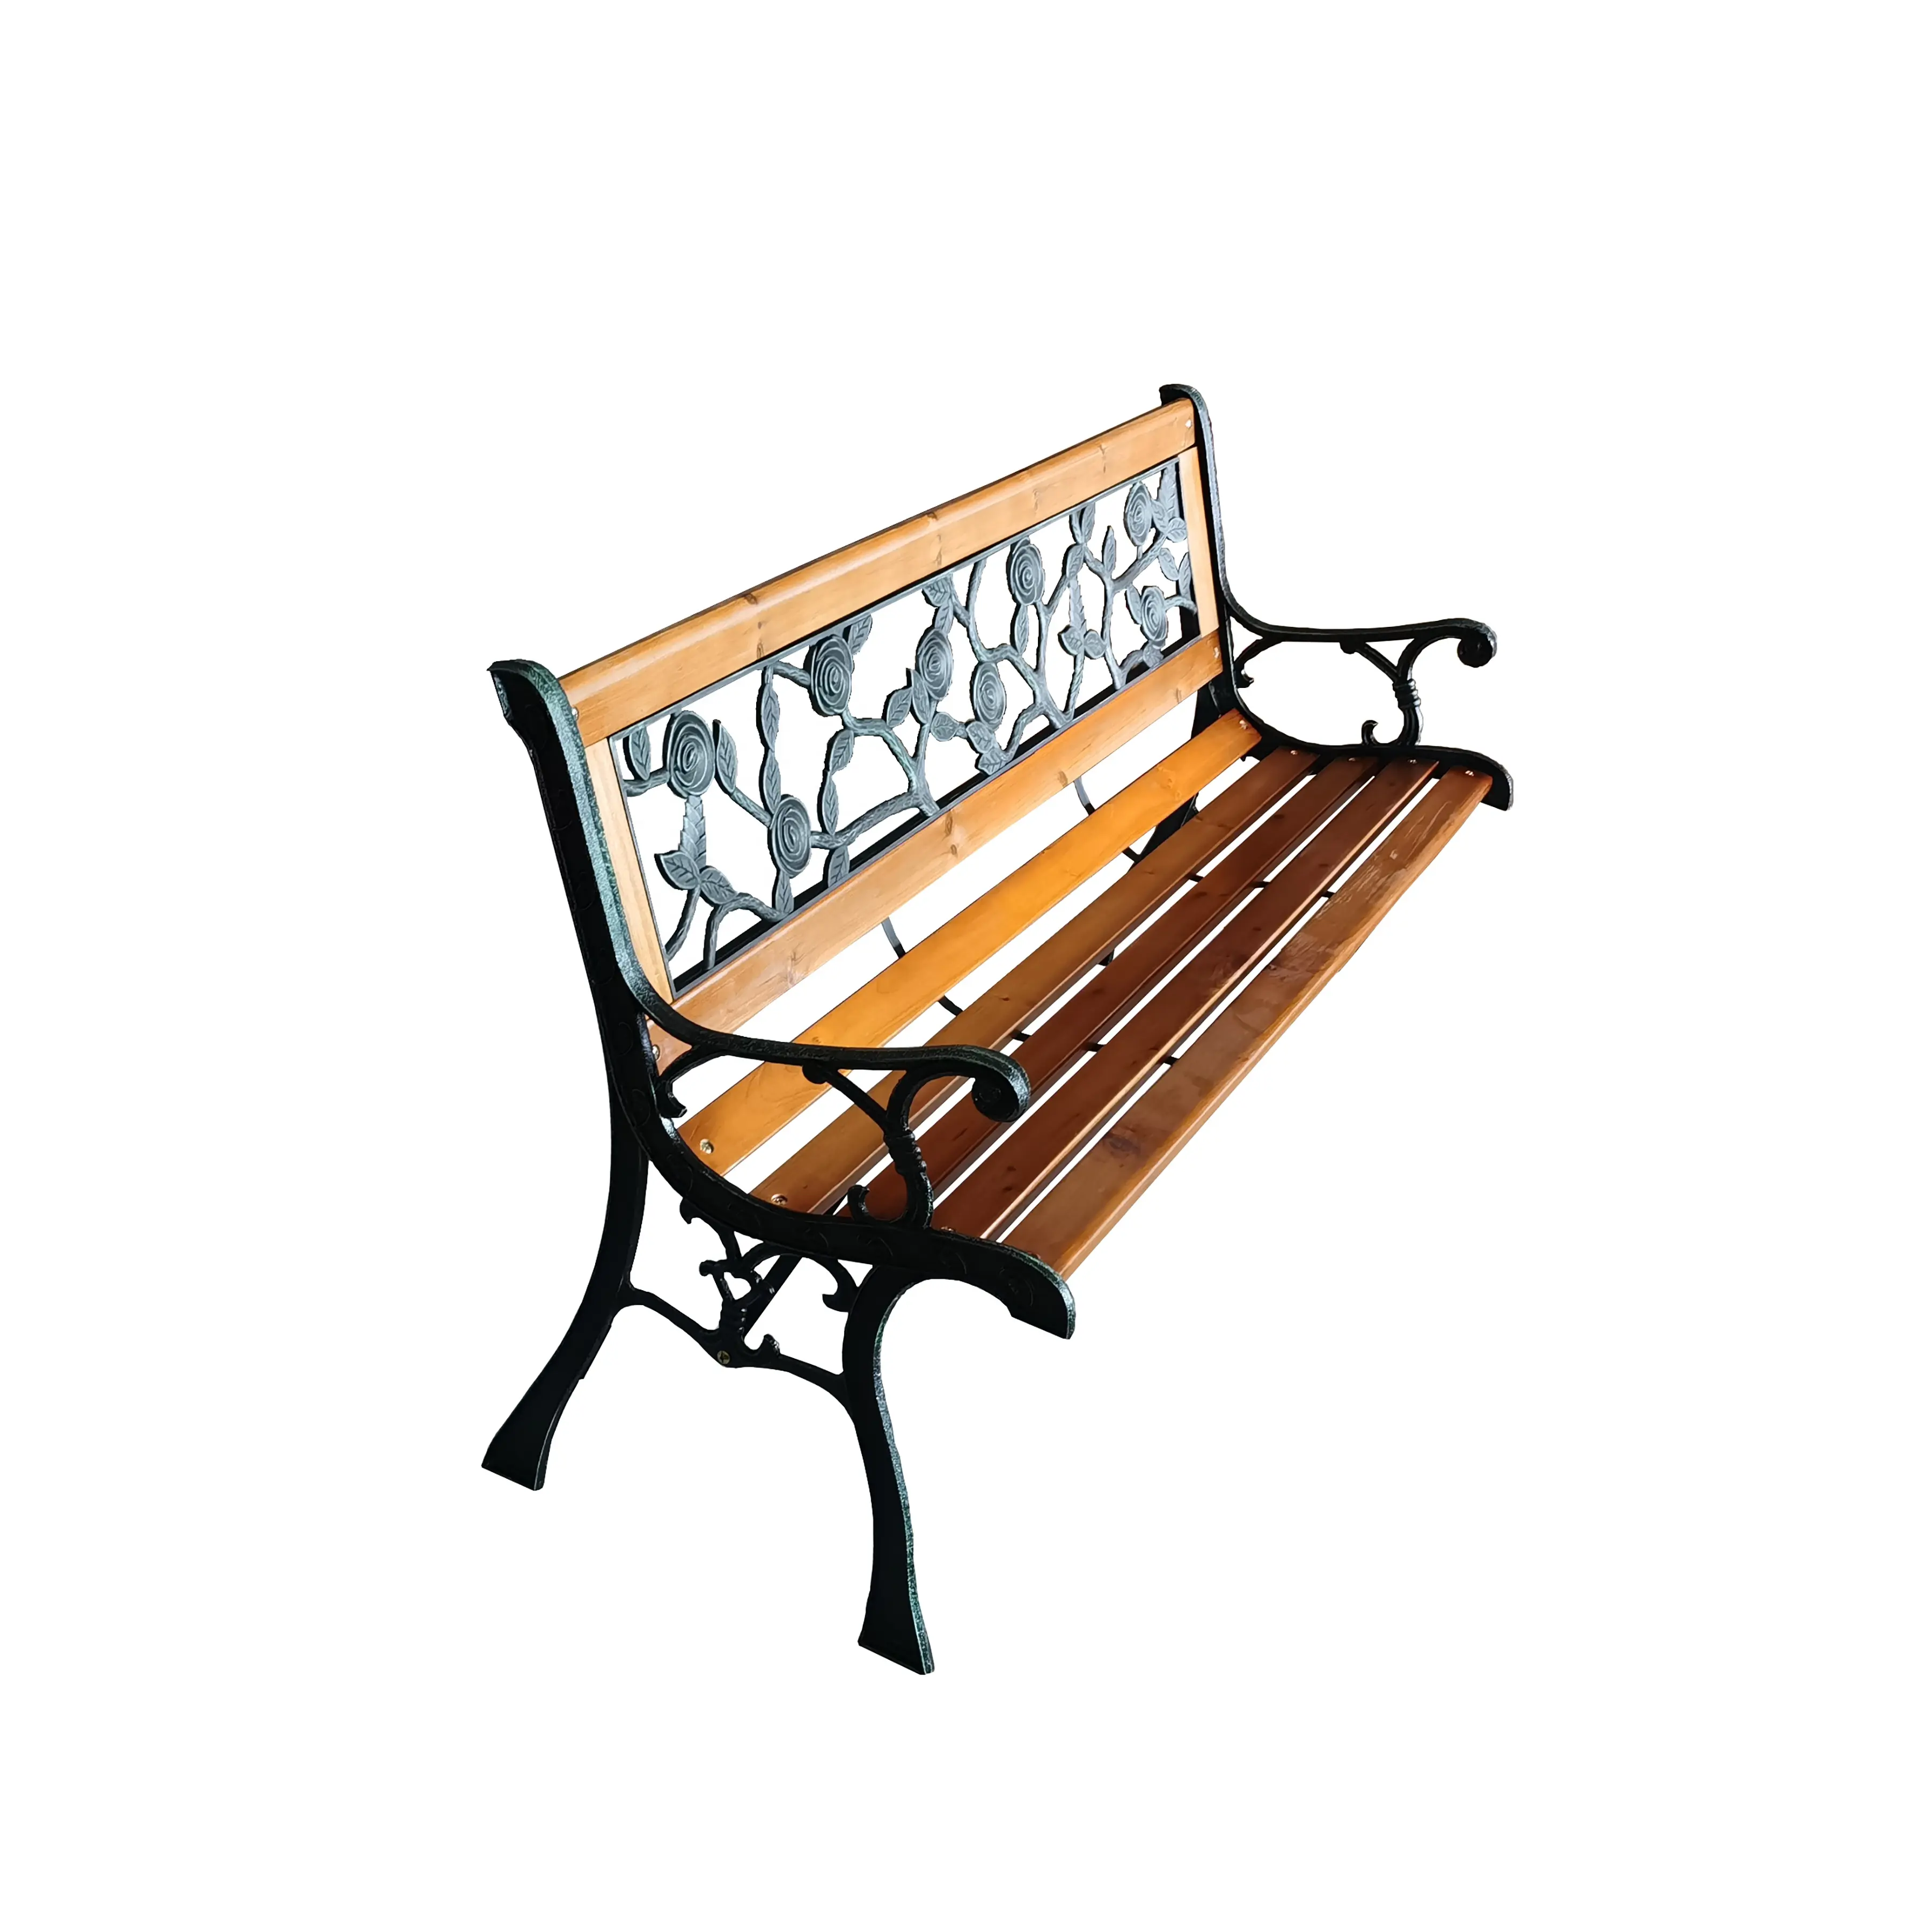 2 Seater Outdoor Wooden Garden Bench Cast Iron Slatted Legs Park Seat Furniture